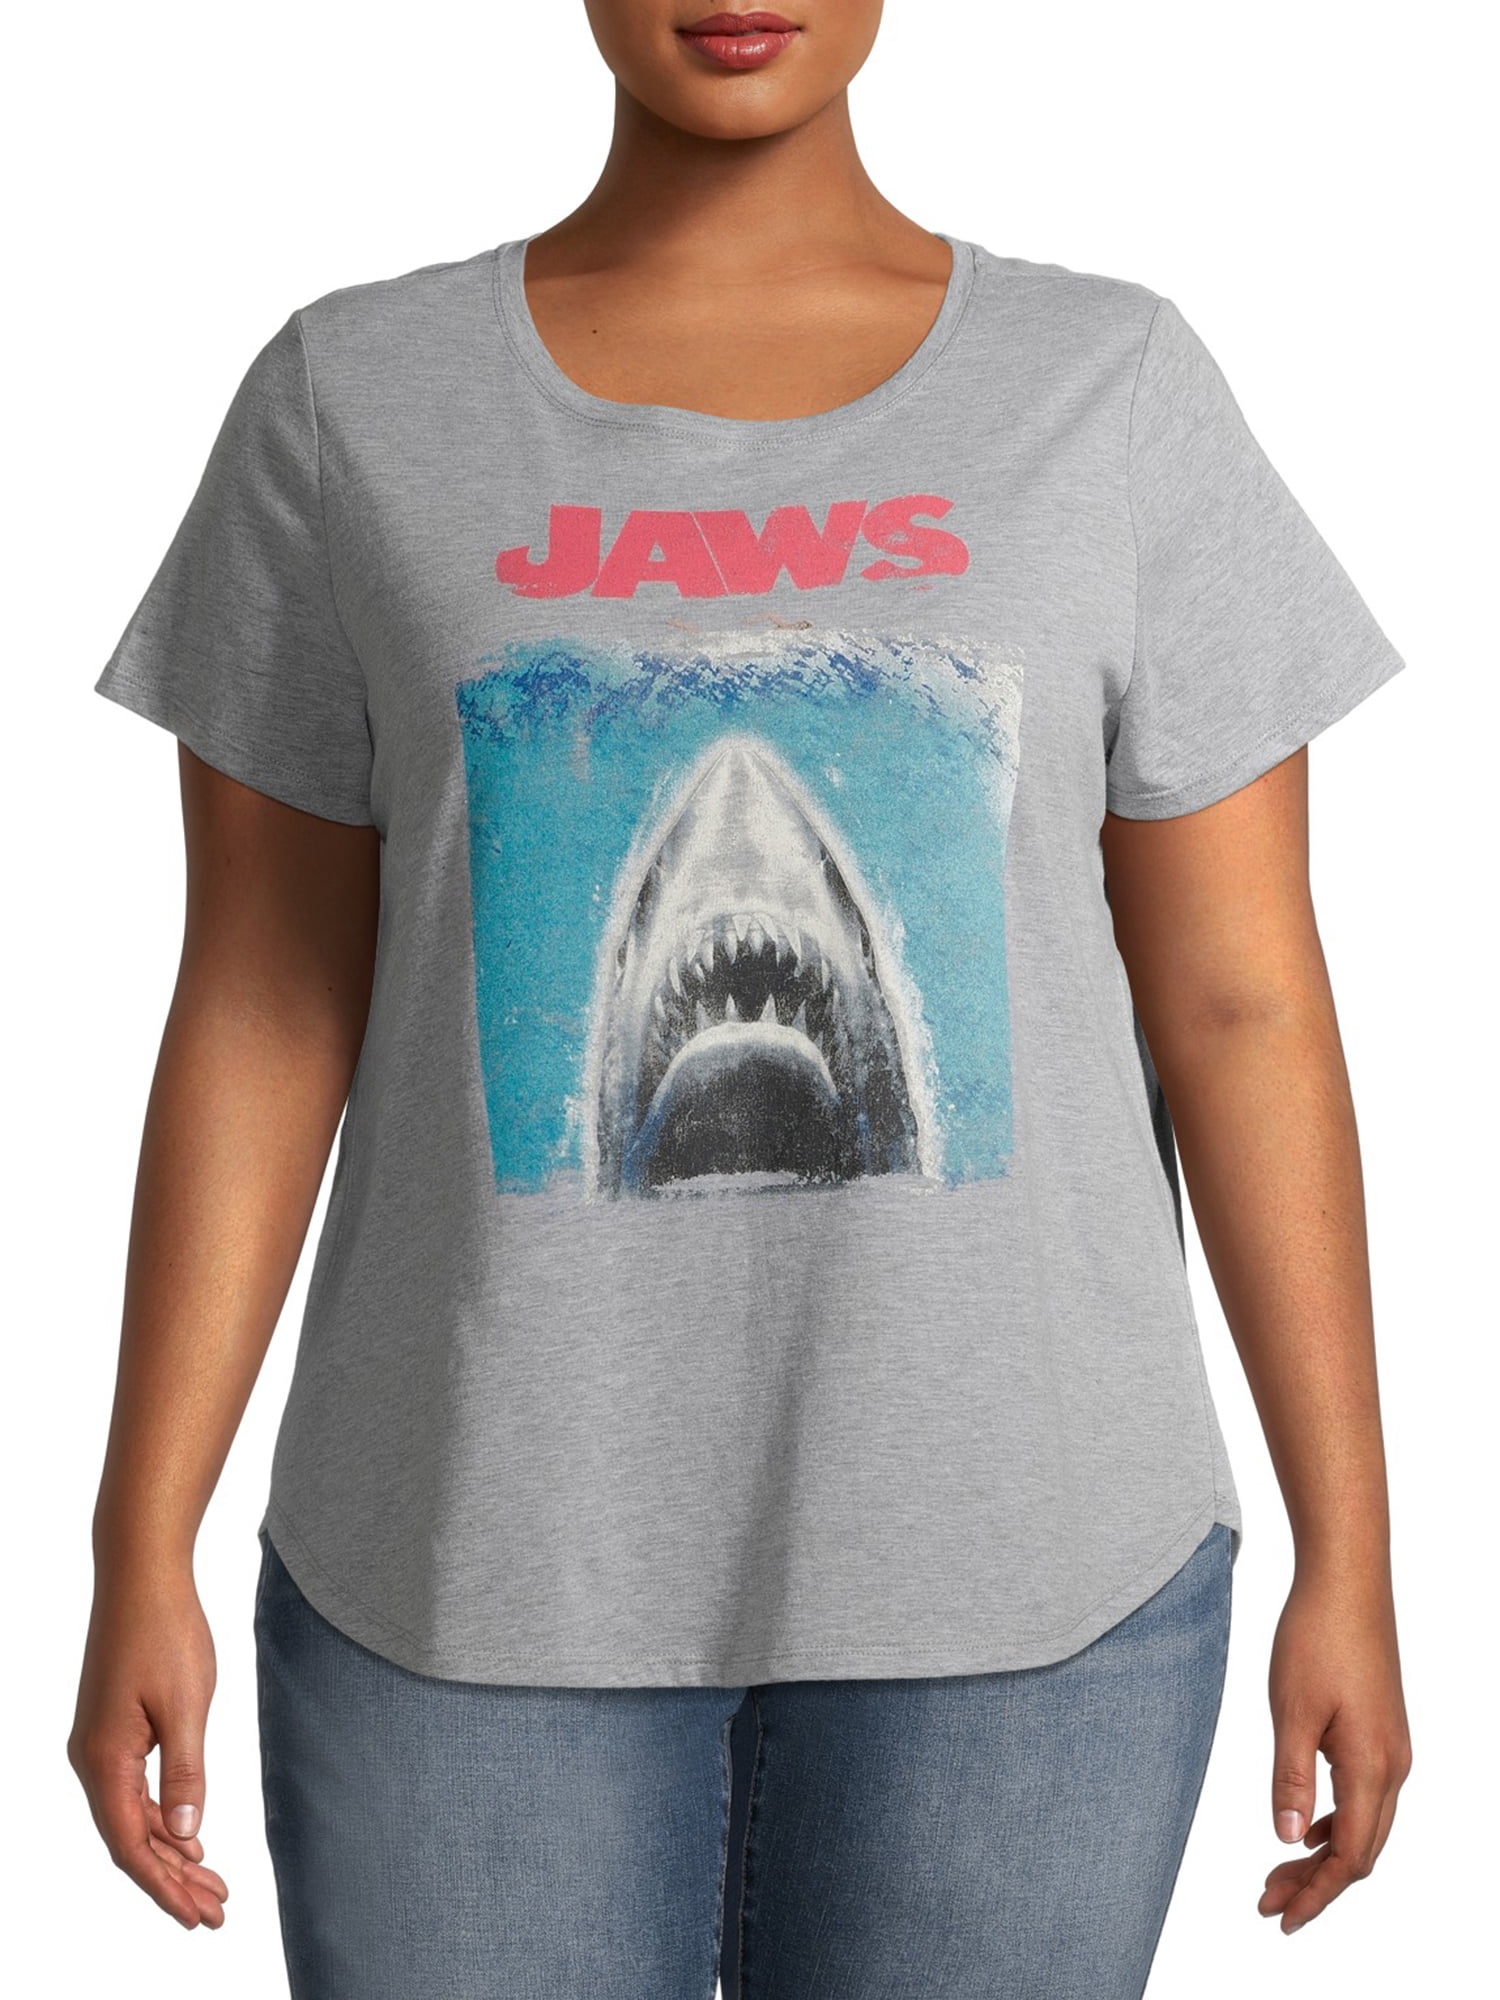 Jaws Women's Plus Size Graphic Short Sleeve T-Shirt - Walmart.com